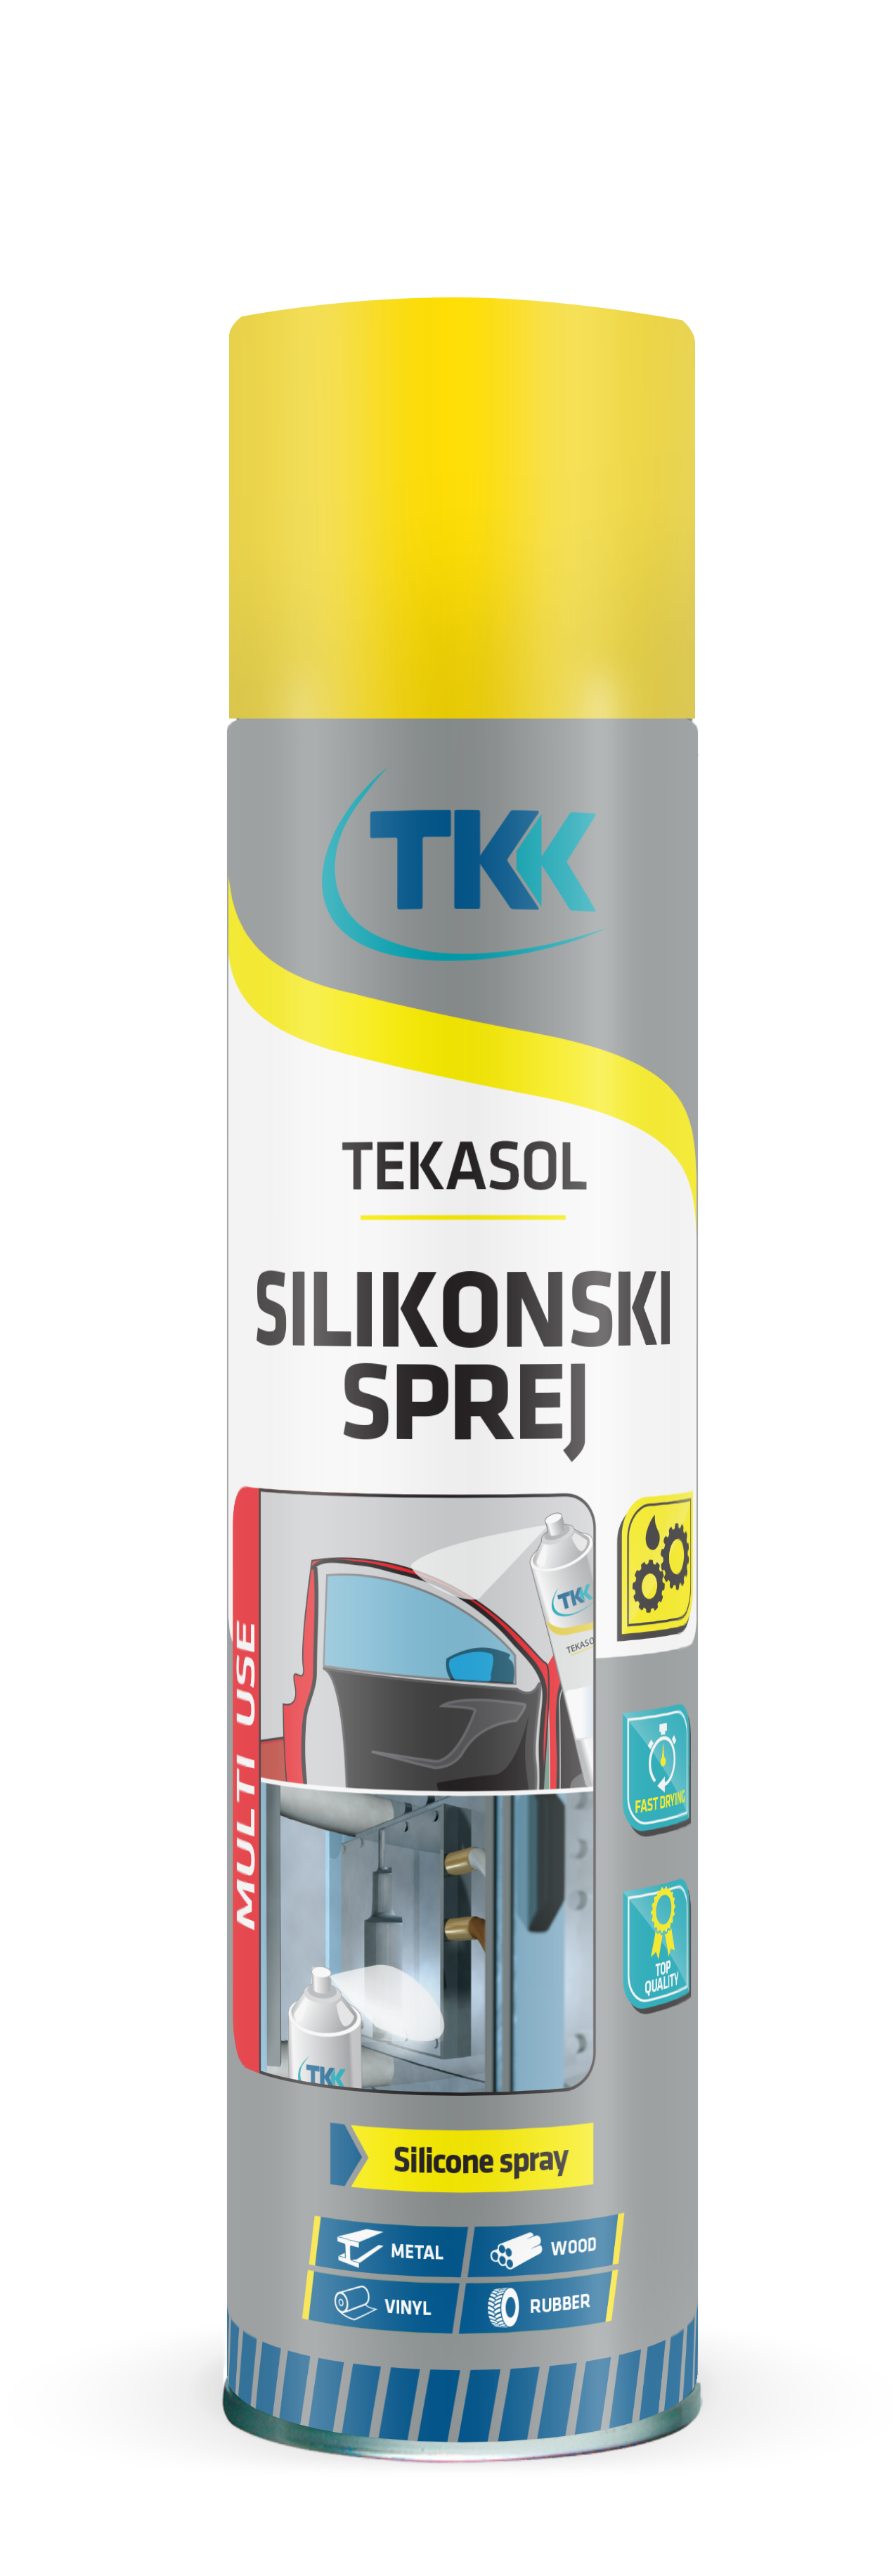 TEKASOL Silicone Spray силиконовый спрей 400 мл.